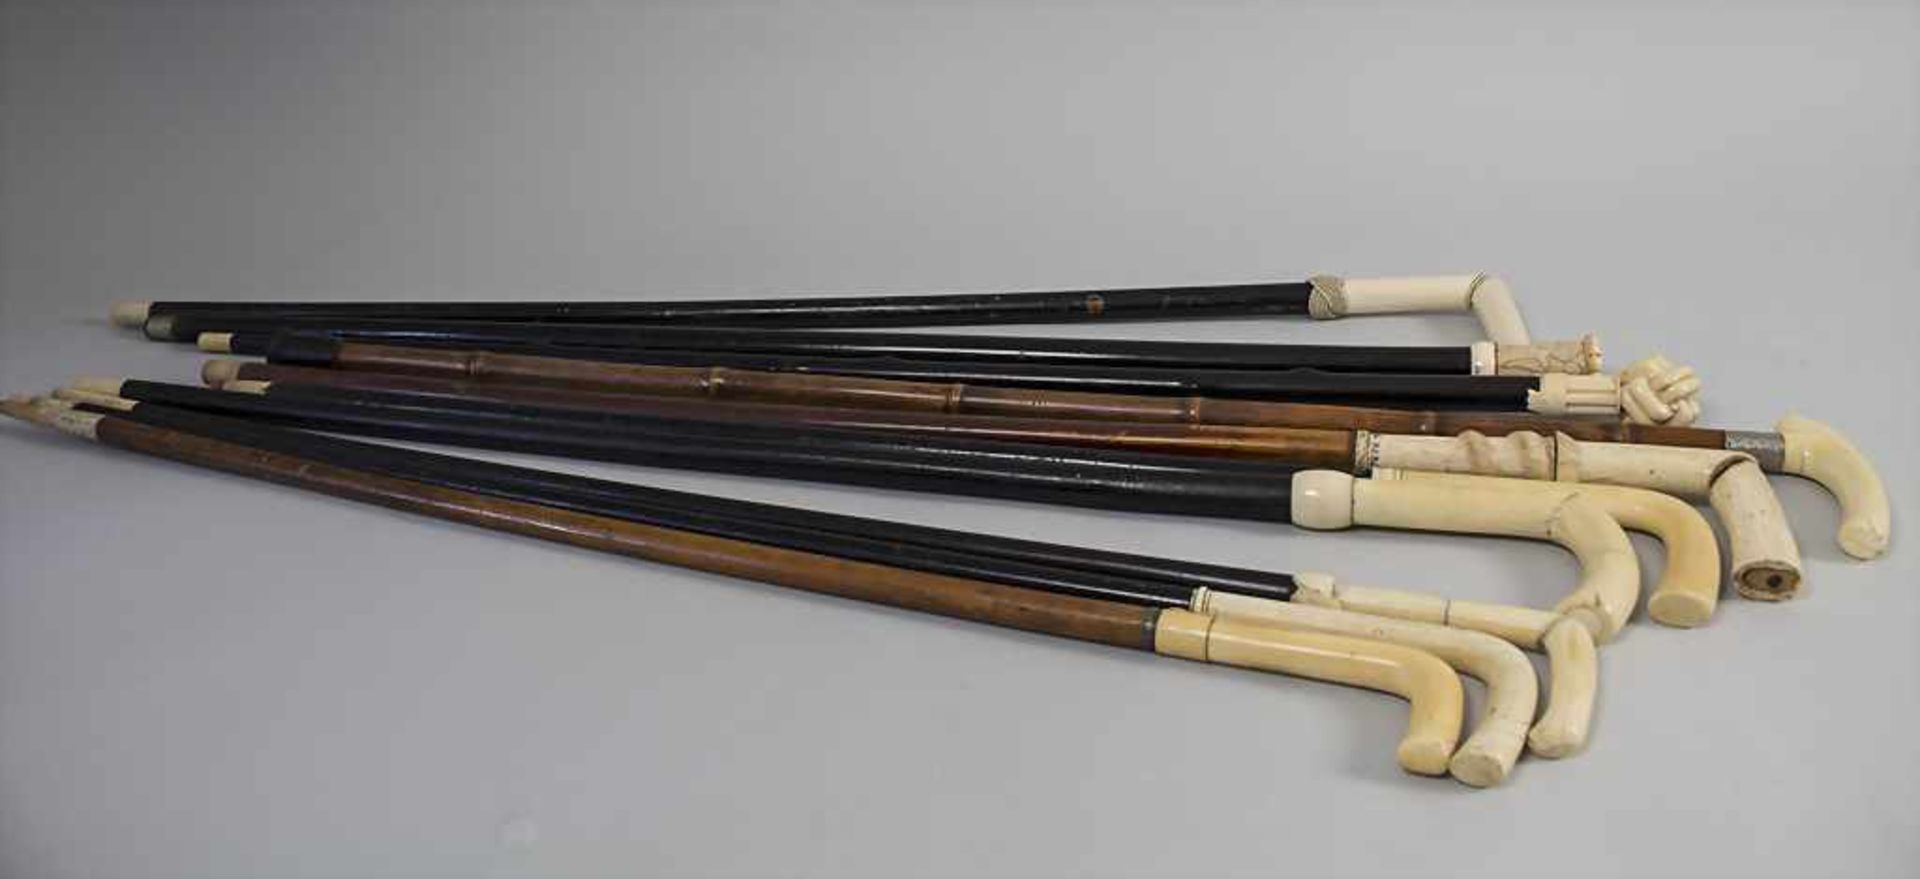 Sammlung 10 Gehstöcke / A collection of 10 canes with ivory handle - Bild 2 aus 27